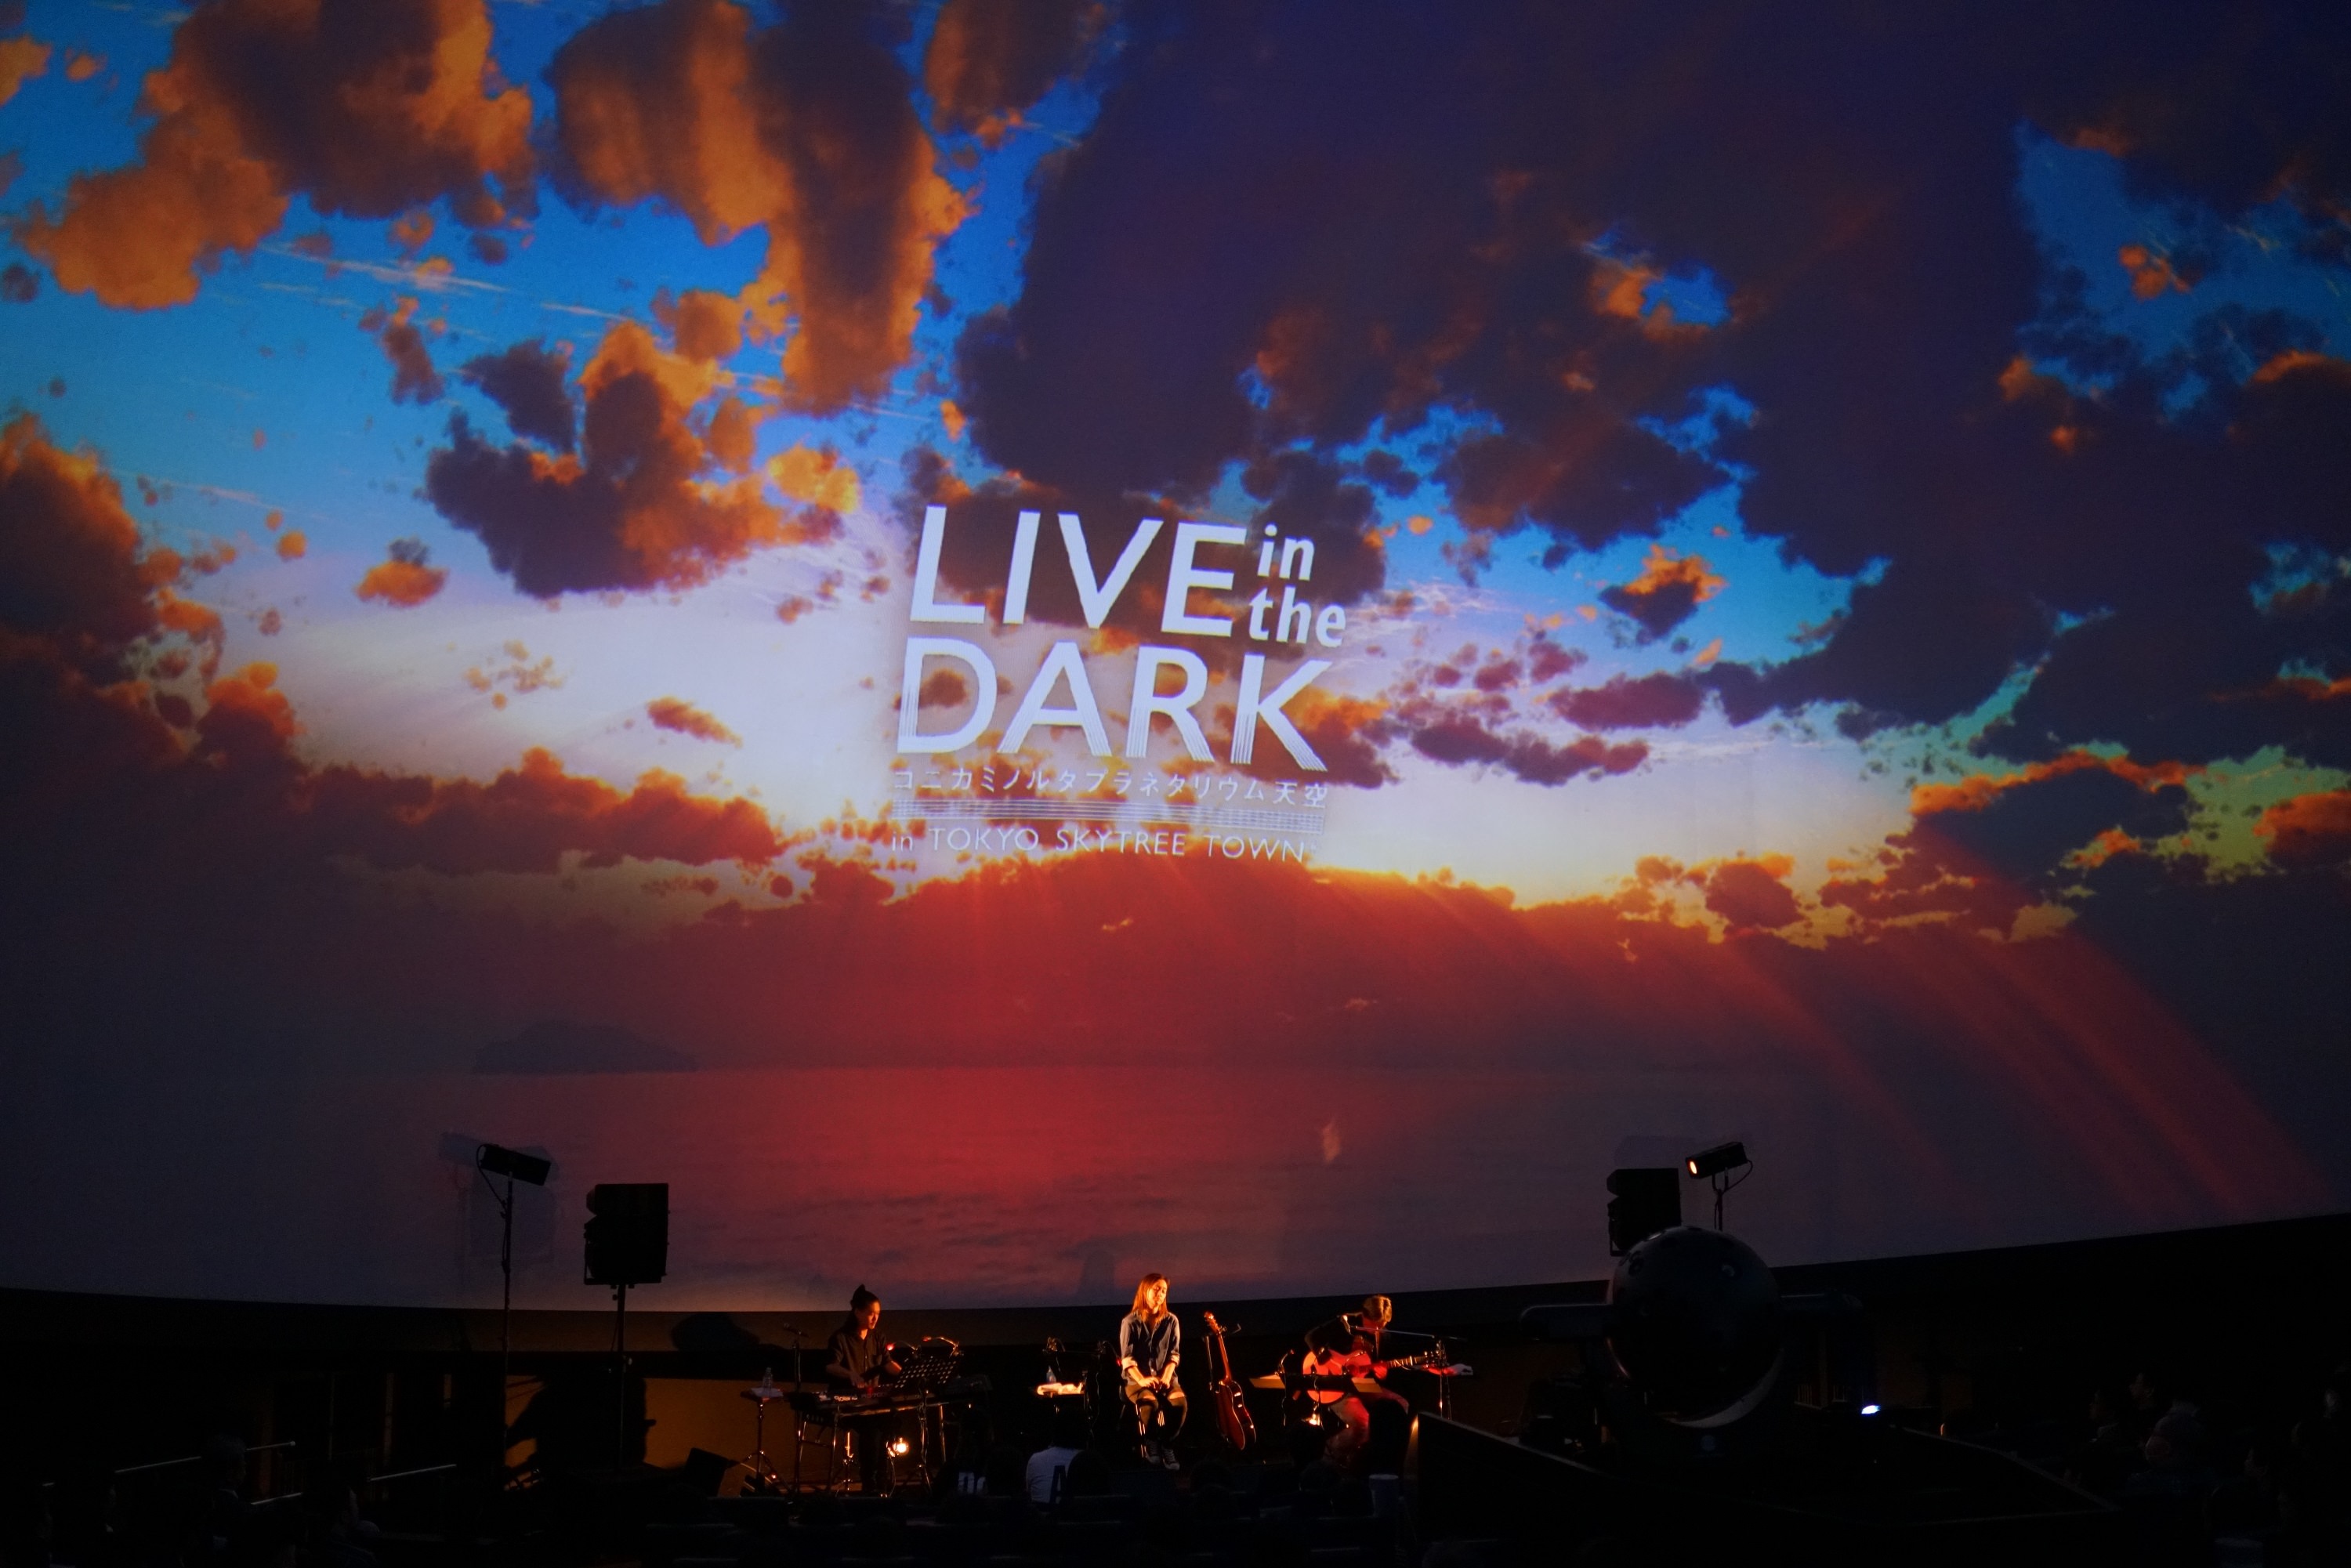 Do As Infinity、笹川美和の振り替え公演が決定
プラネタリウムでの音楽ライブイベント
『LIVE in the DARK』が復活